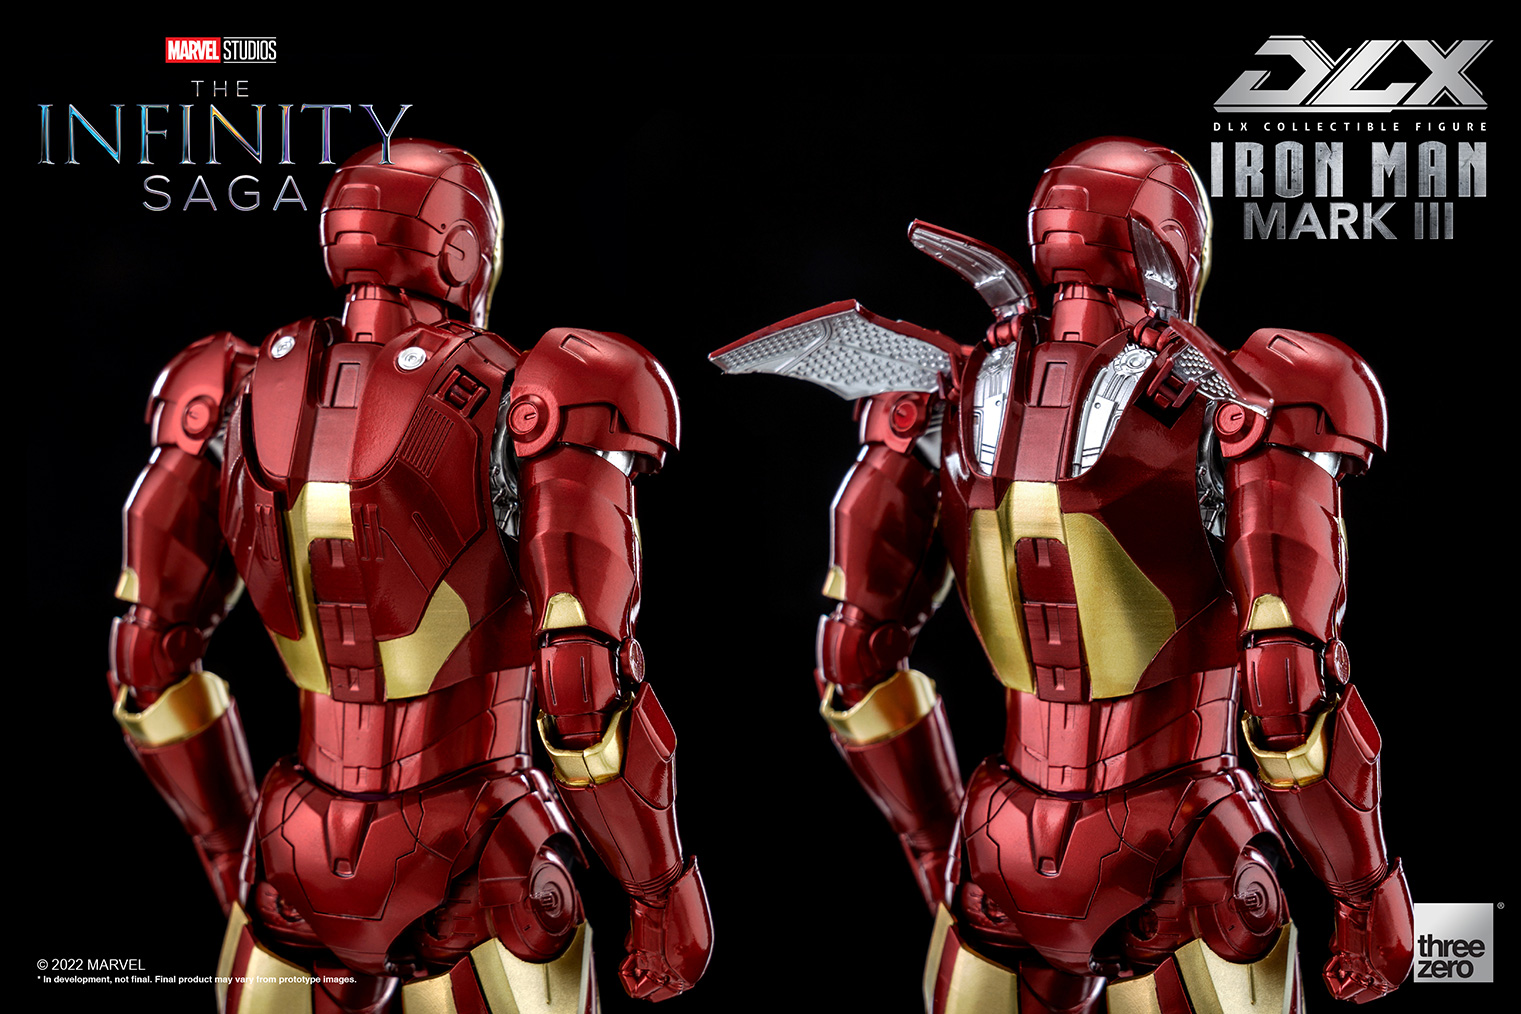 Marvel Studios: The Infinity SagaDLX Iron Man Mark 6 – threezero store